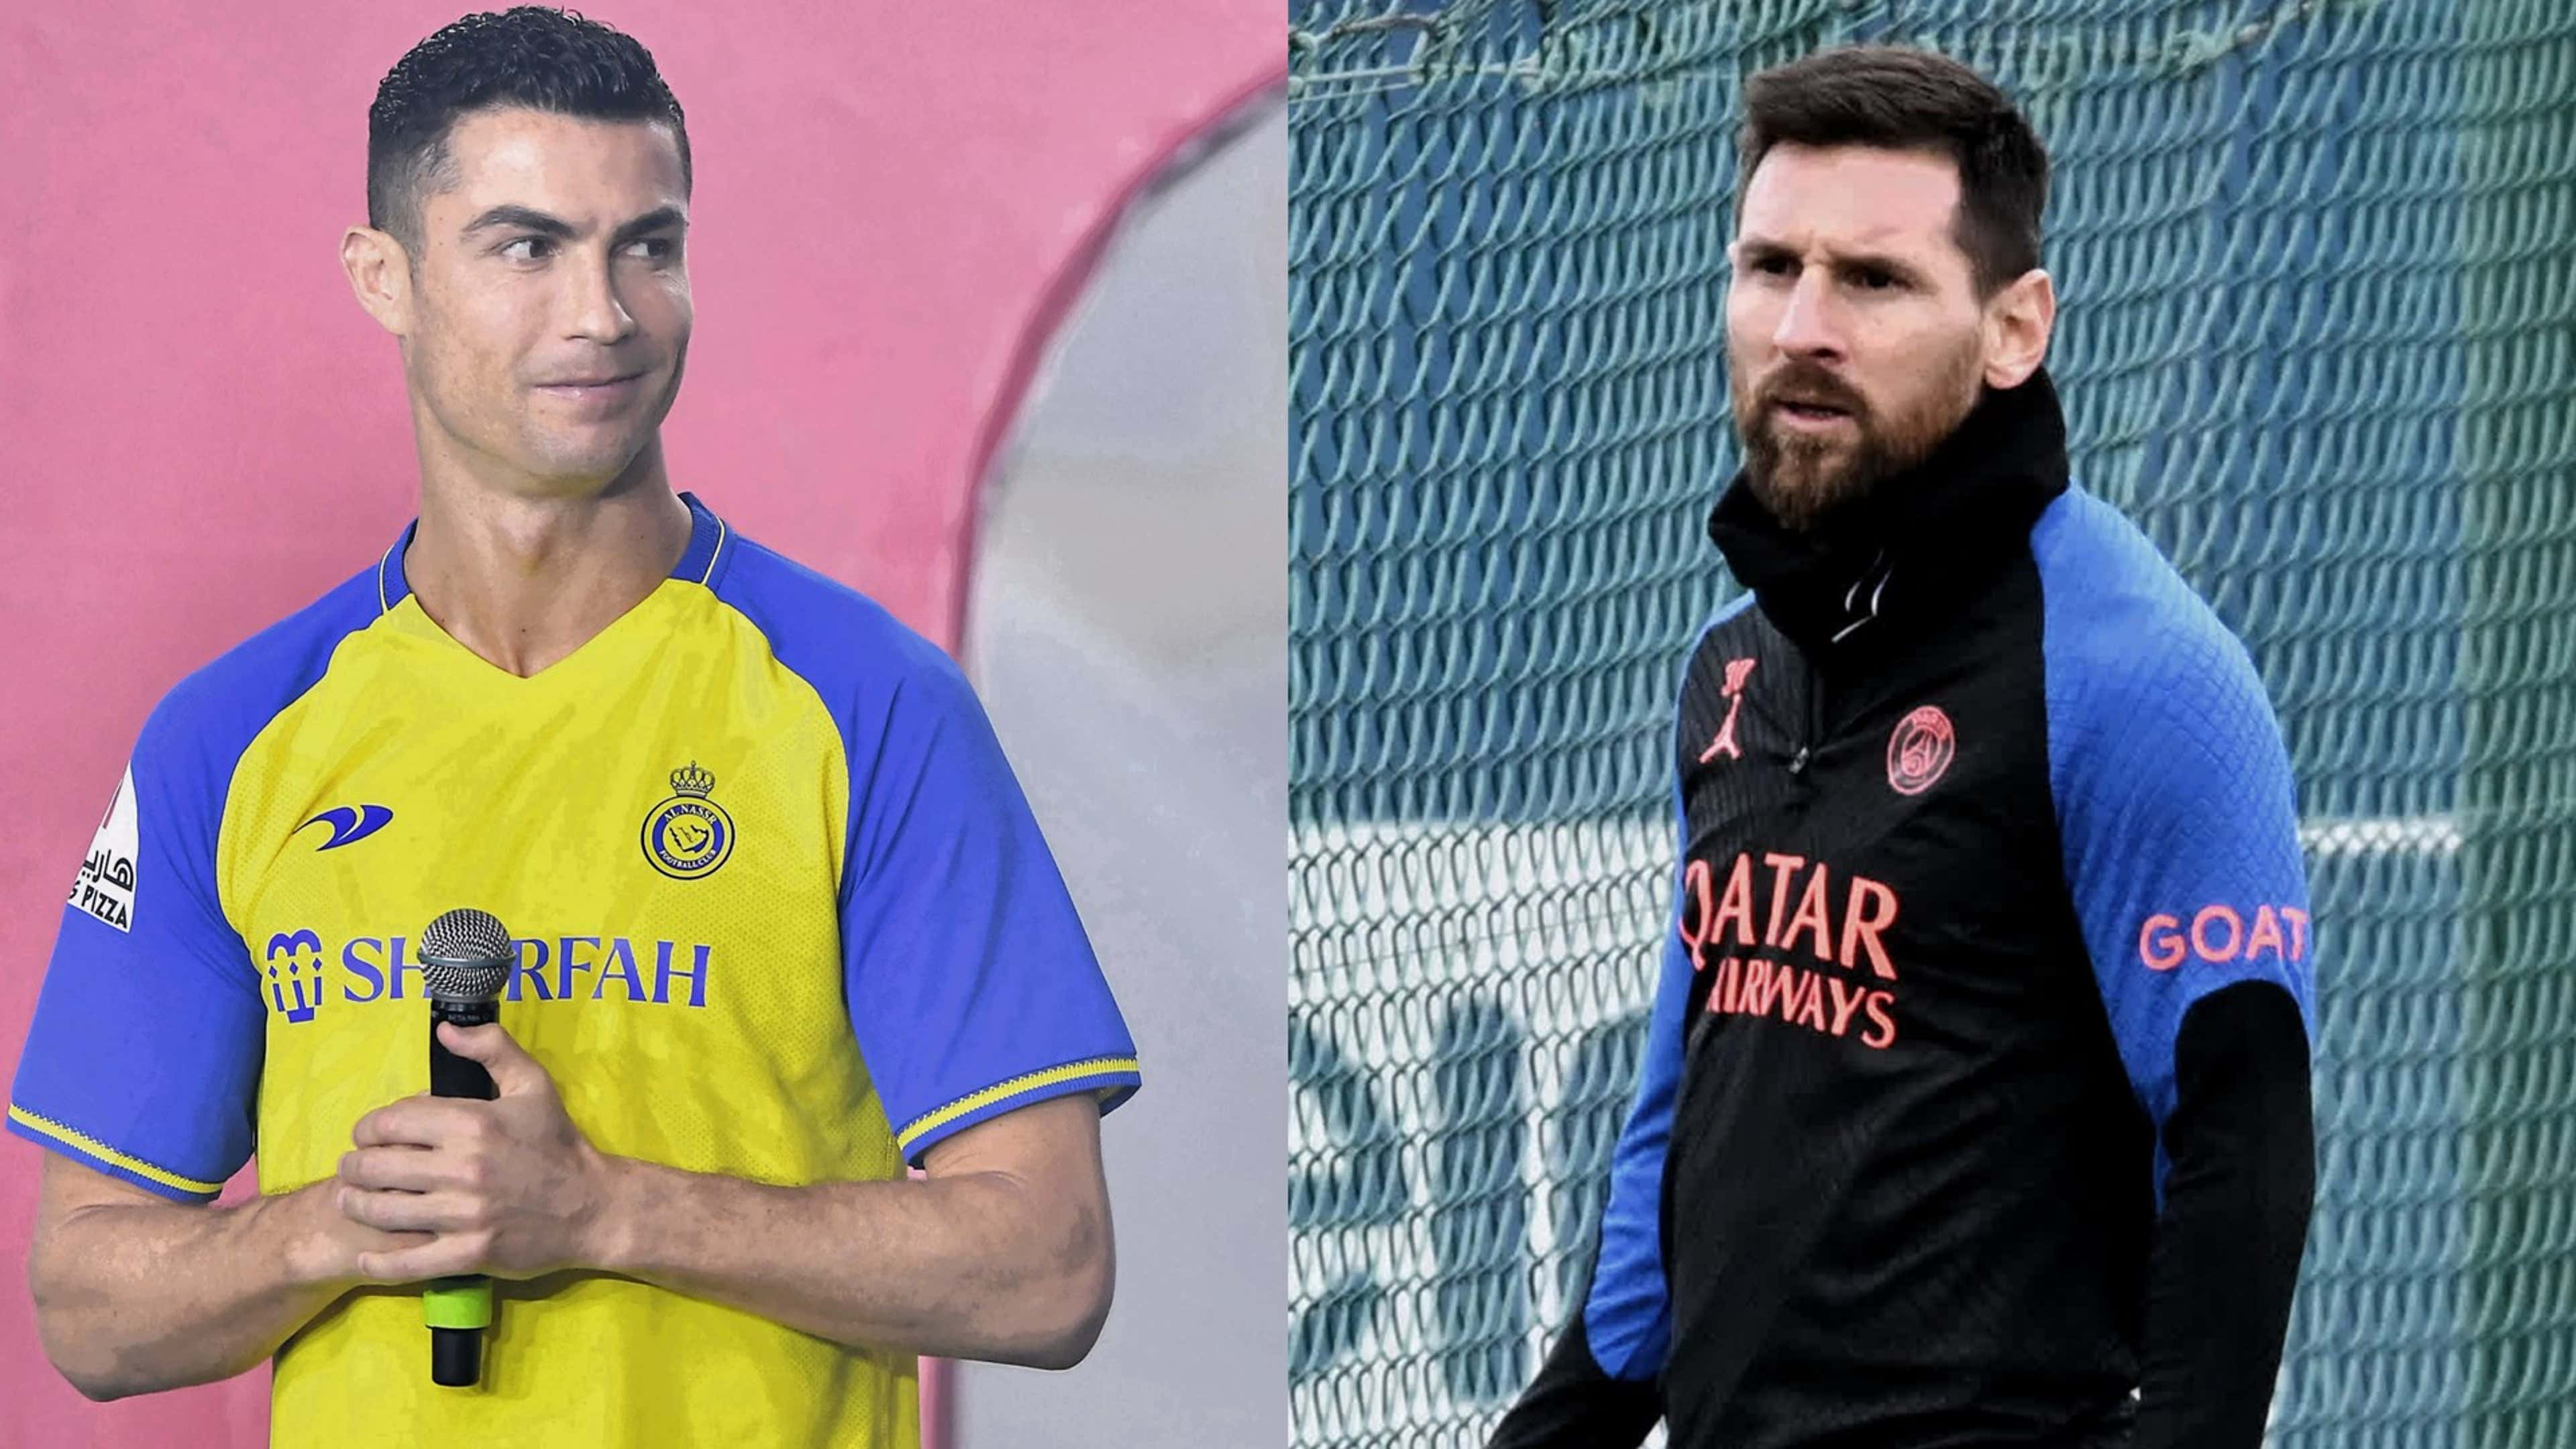 Lionel Messi could join Cristiano Ronaldo in Saudi as Pro League